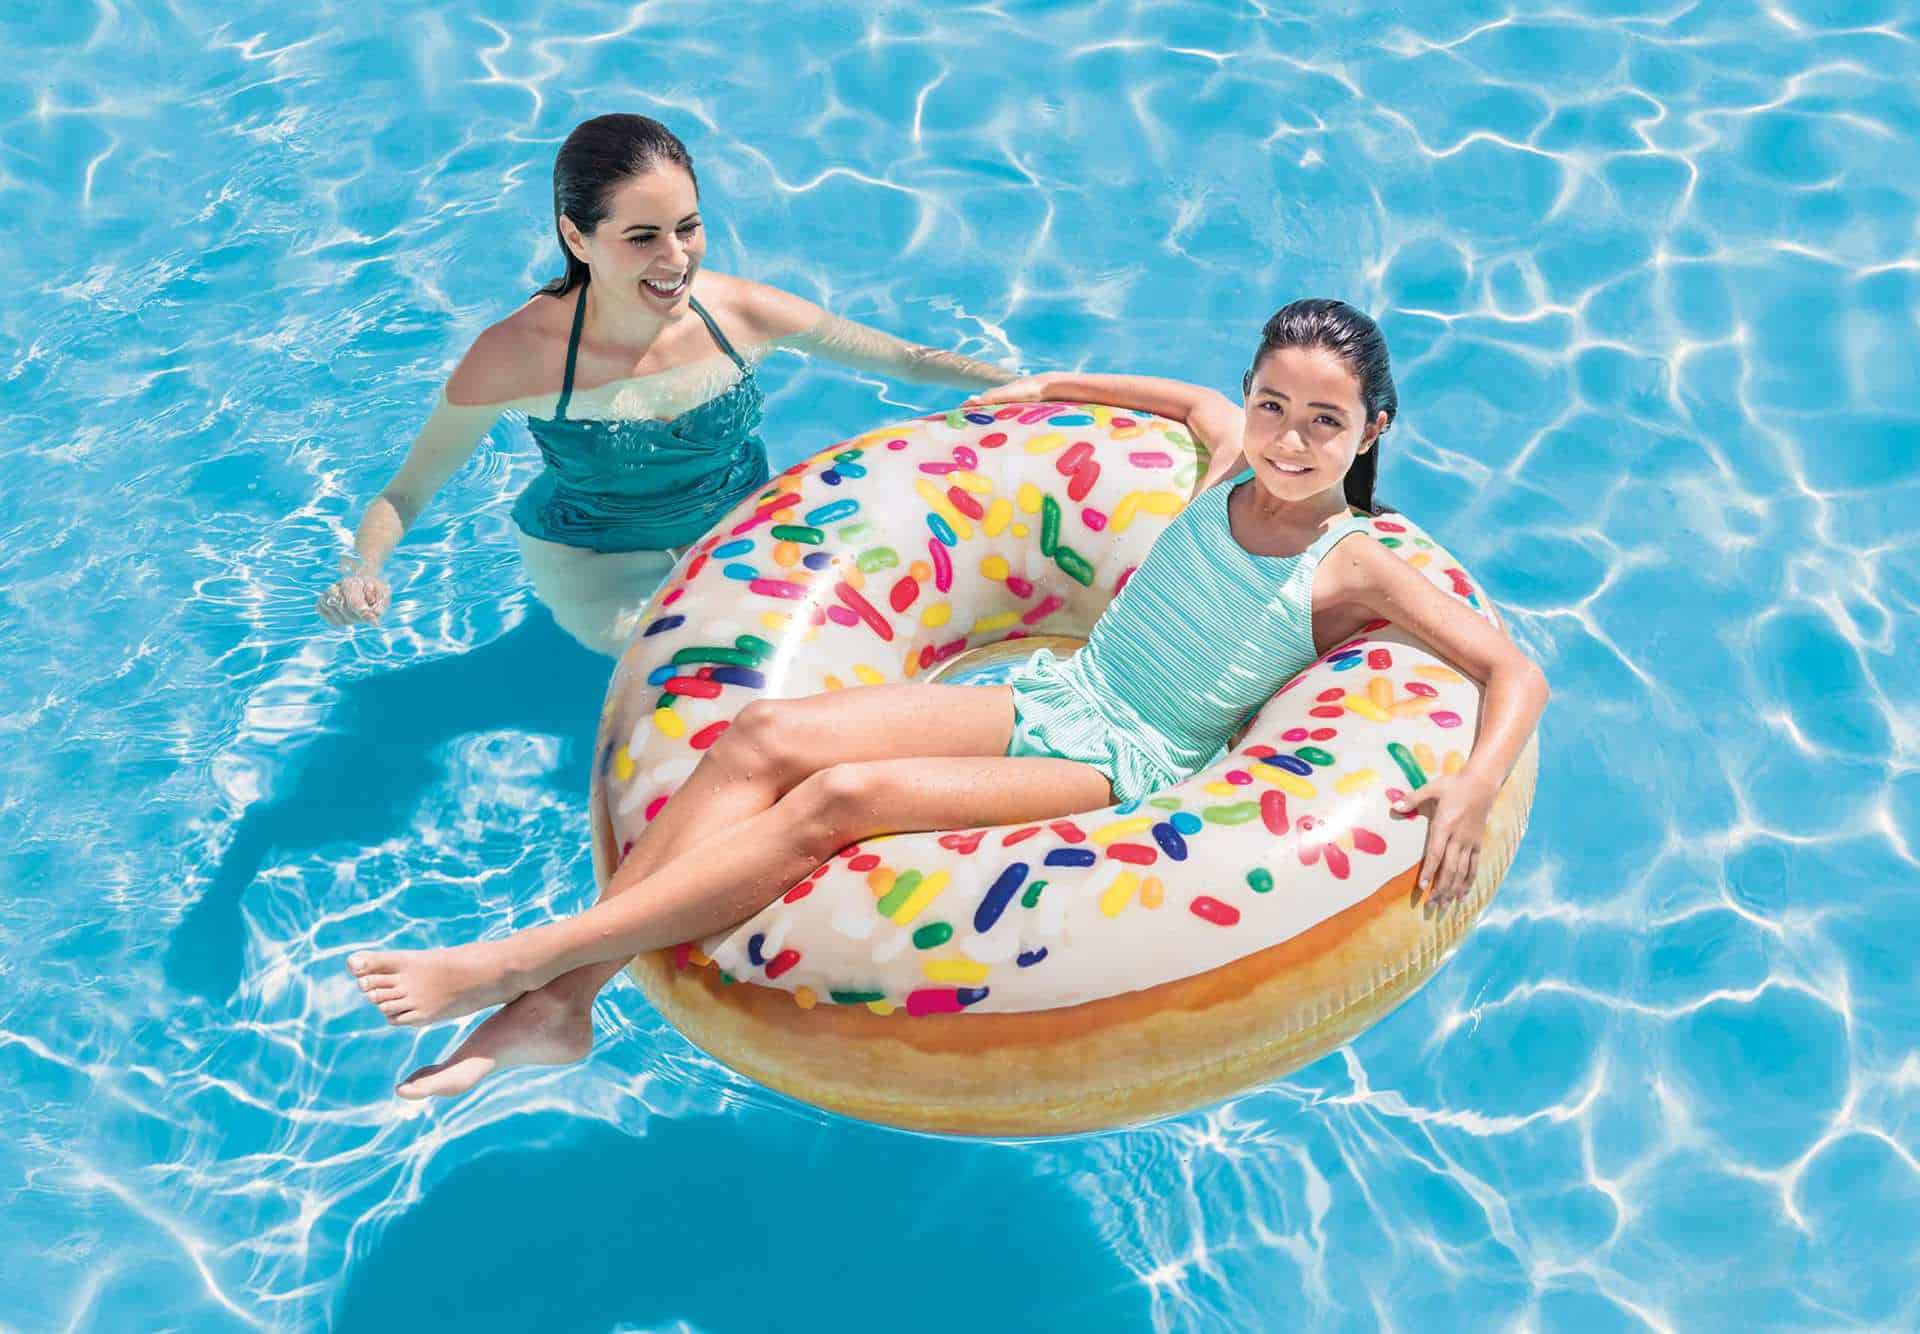 Swimming Ring Floating Tube 99cm Donut Intex Summer